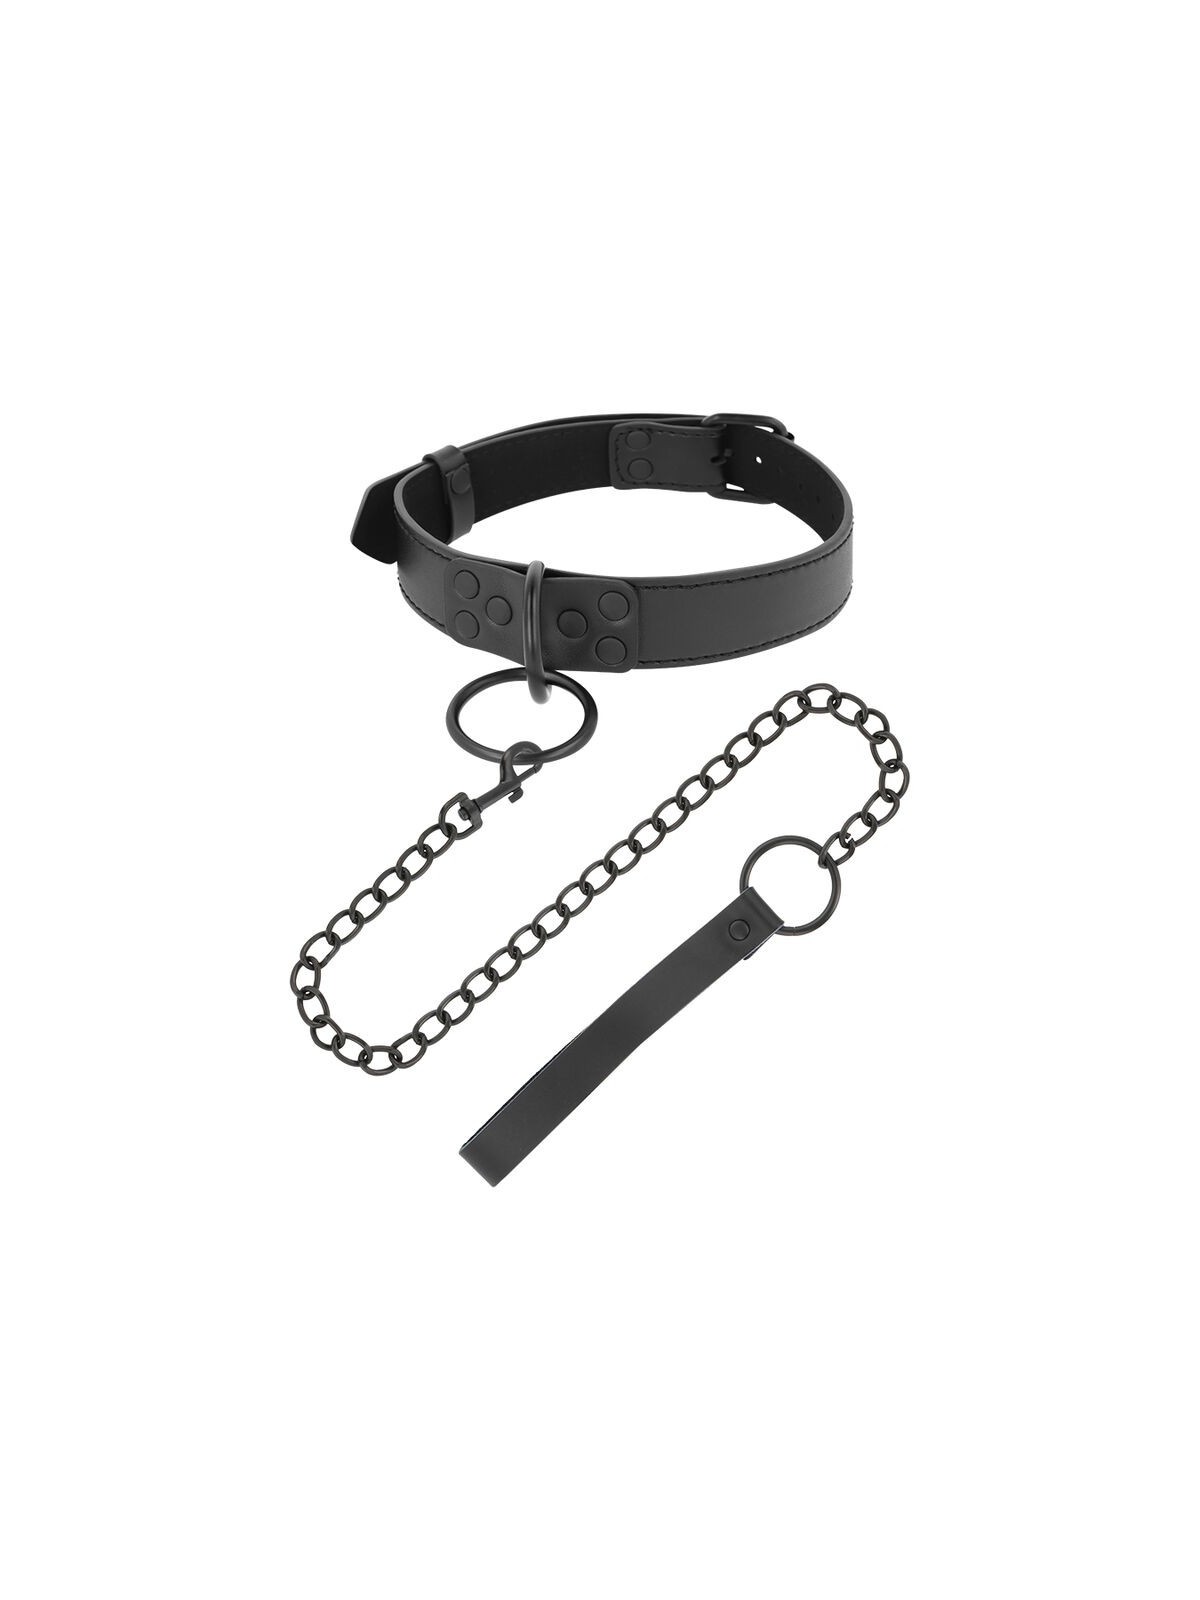 Darkness Collar Con Cadena Negro - Comprar Collar BDSM Darkness - Collares BDSM (1)